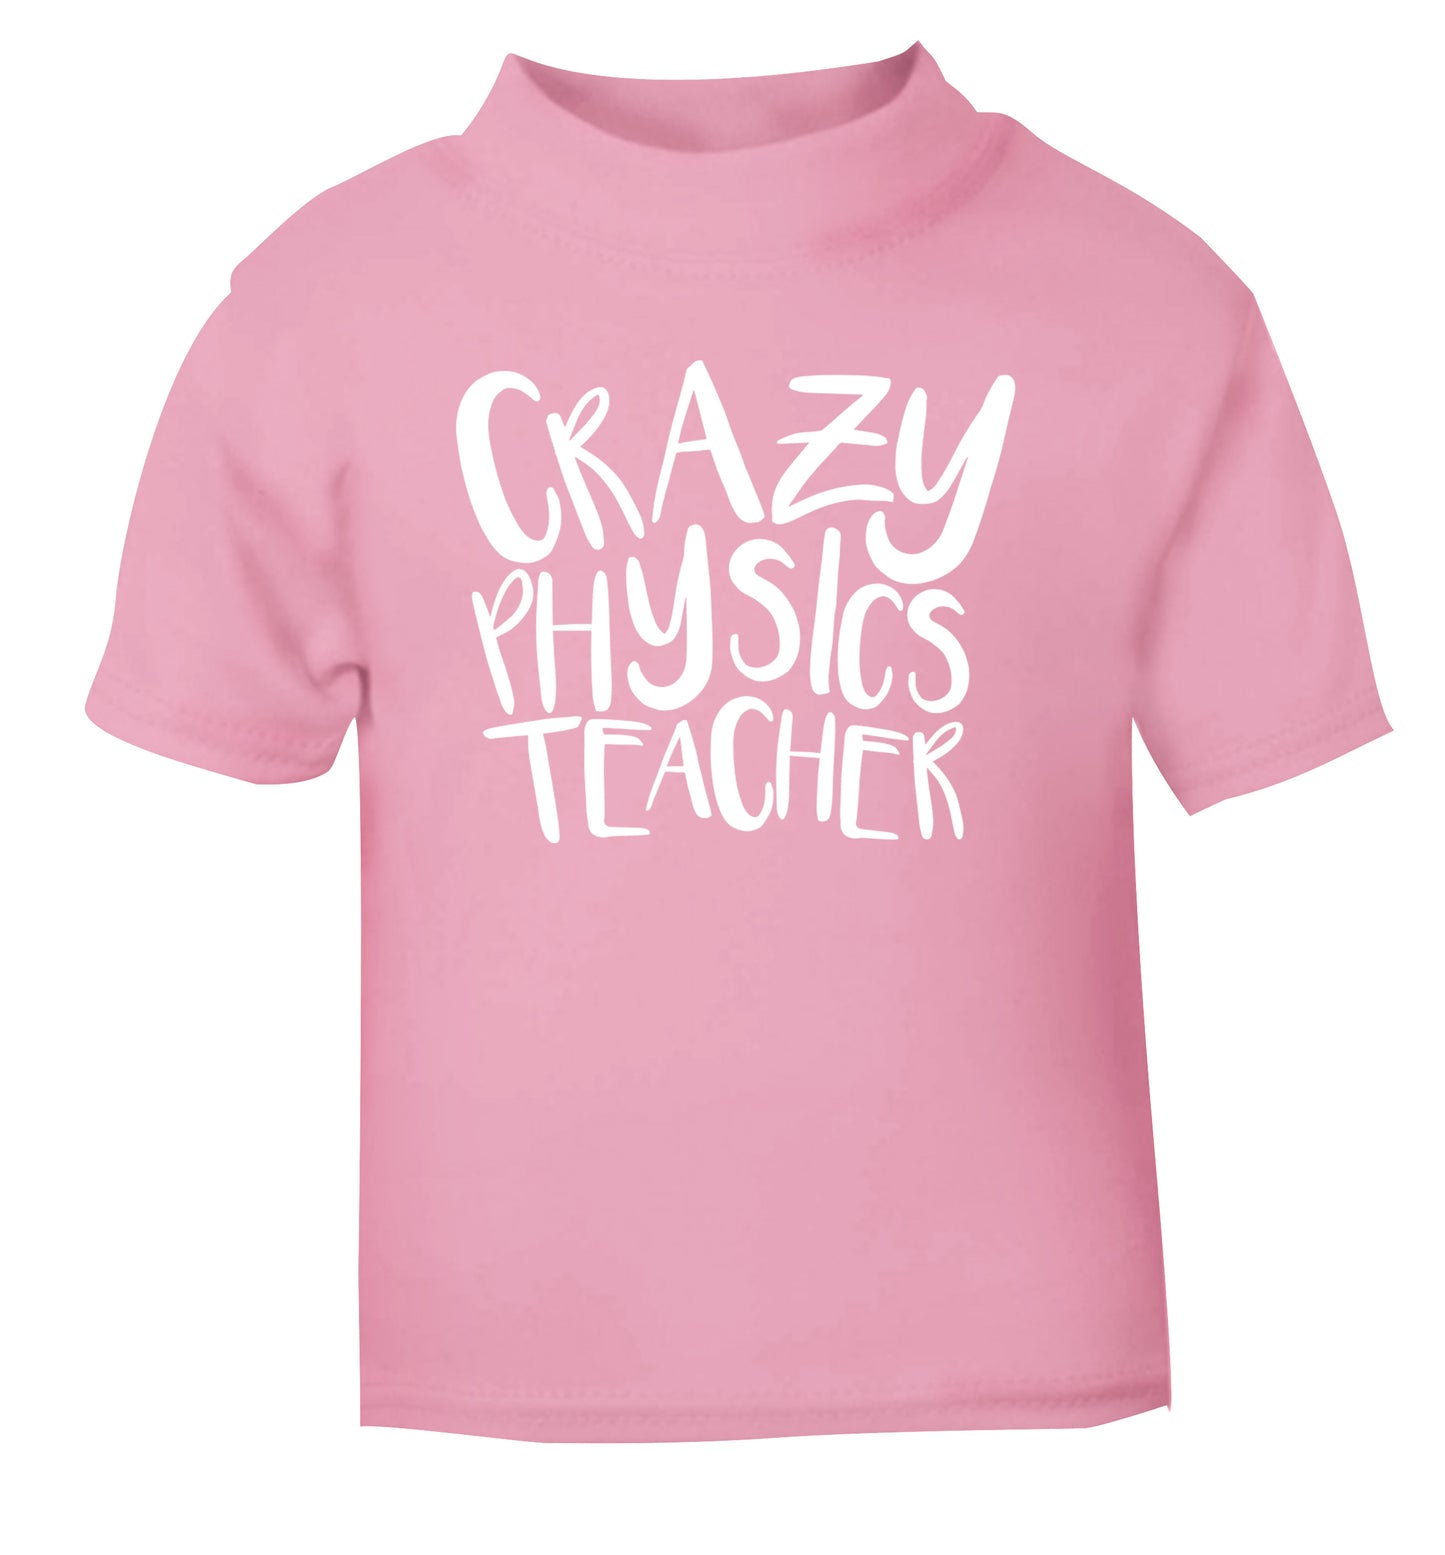 Crazy physics teacher light pink Baby Toddler Tshirt 2 Years